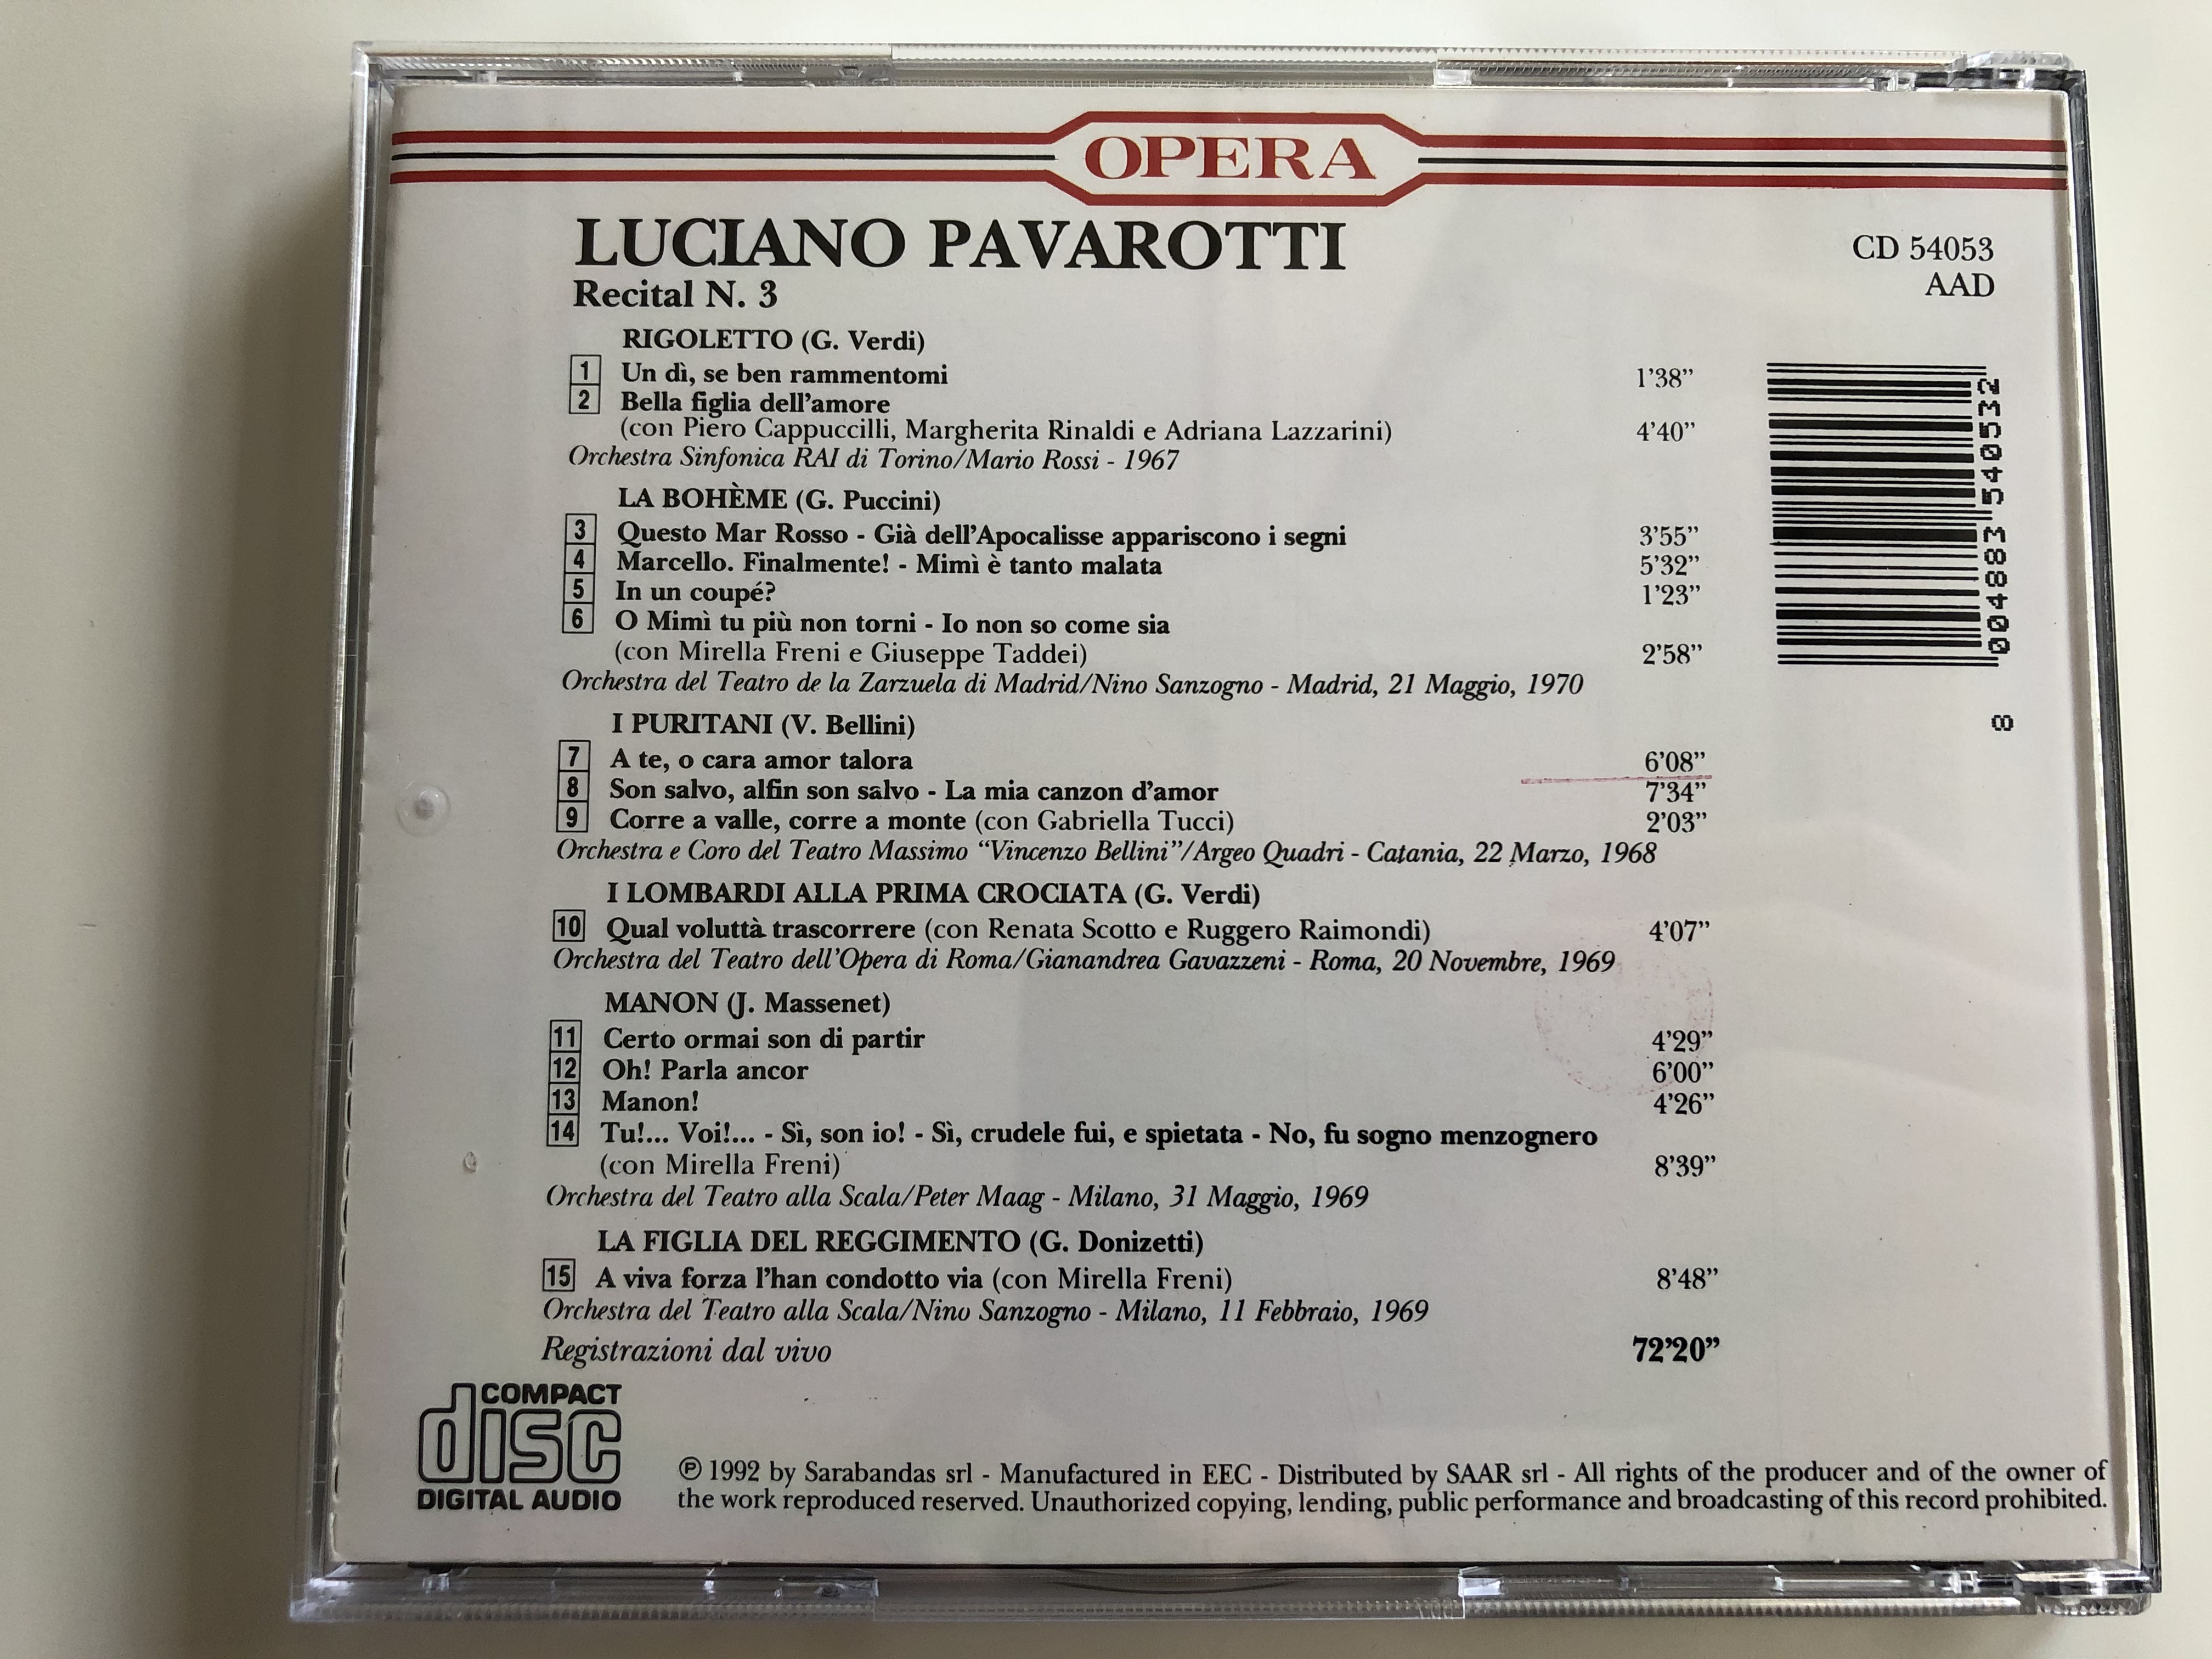 luciano-pavarotti-recital-n.3-opera-audio-cd-1991-cd-54053-4-.jpg